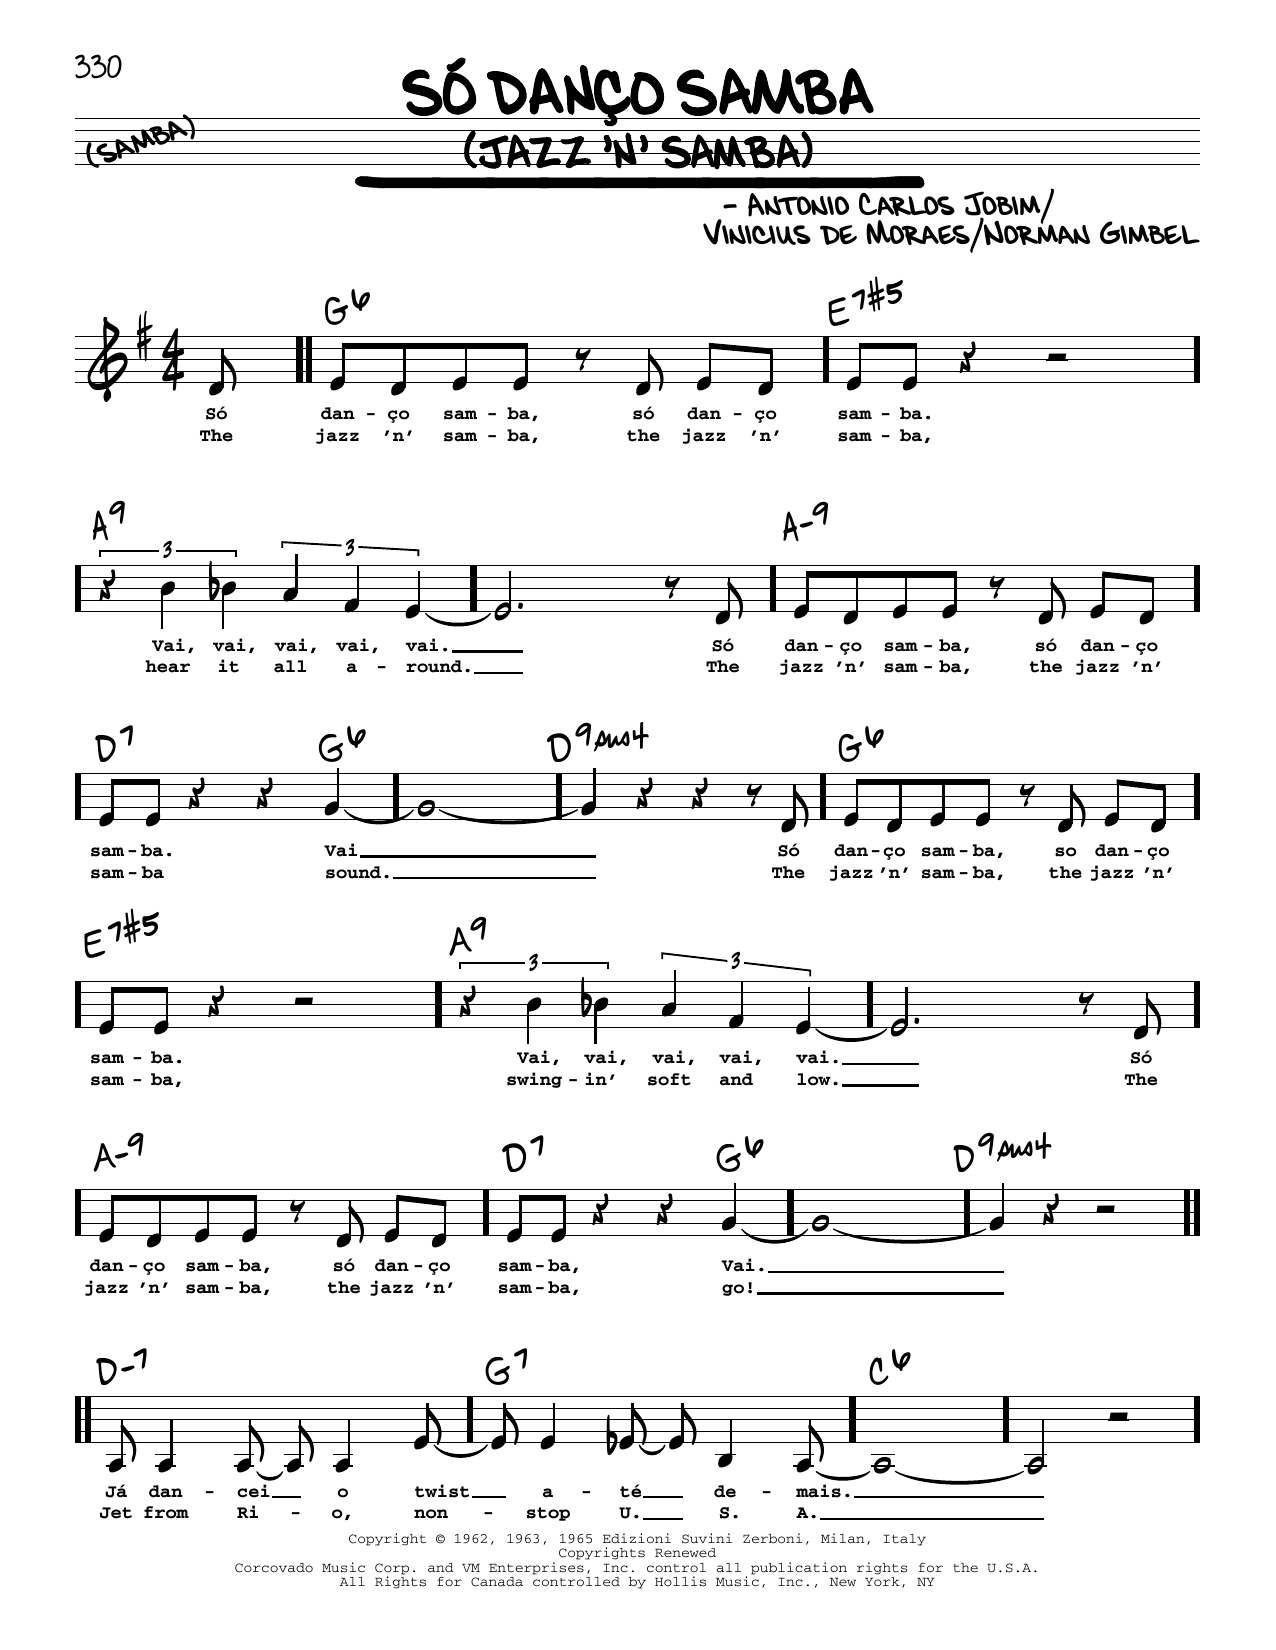 Antonio Carlos Jobim Jazz 'N' Samba (So Danco Samba) (Low Voice) sheet music notes printable PDF score